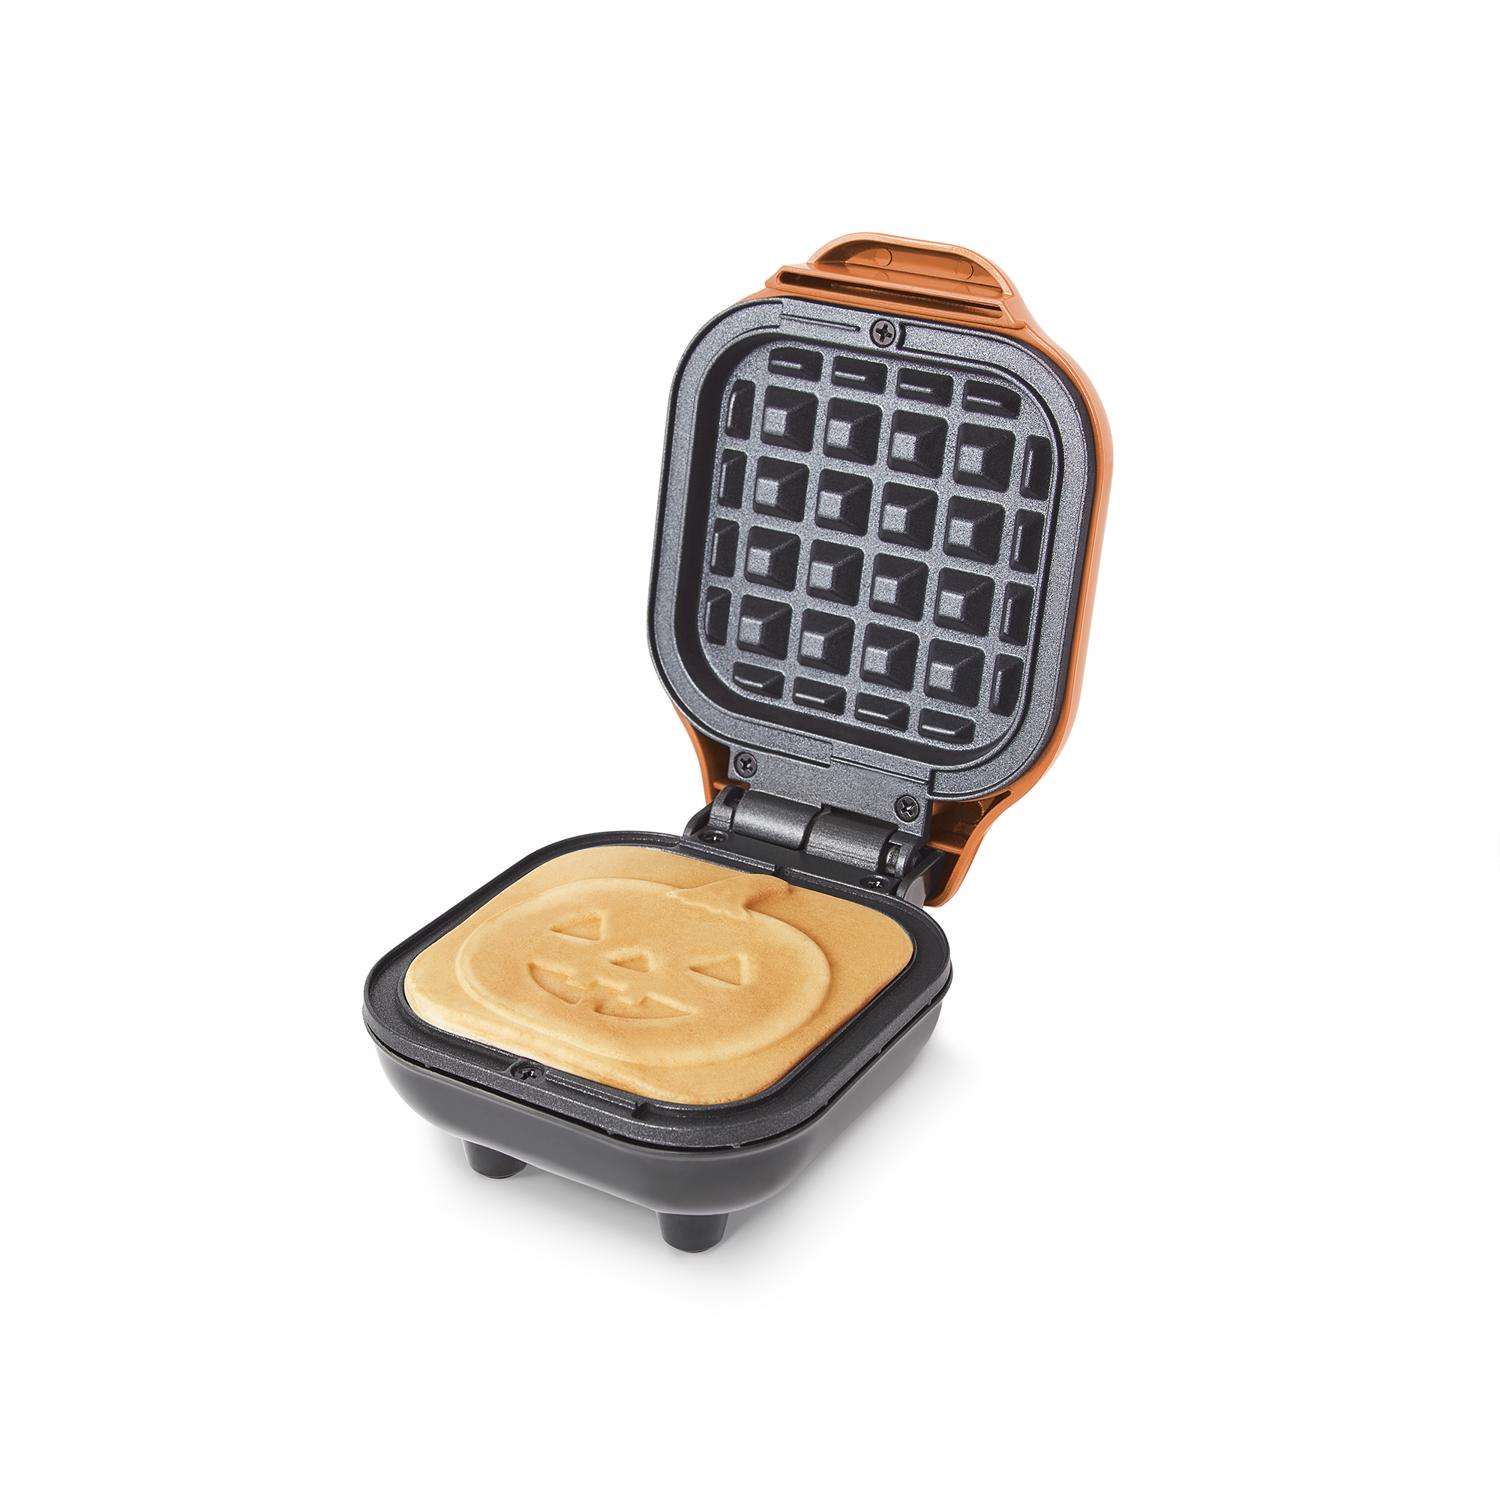 Rise by Dash Blue Mini Waffle Maker